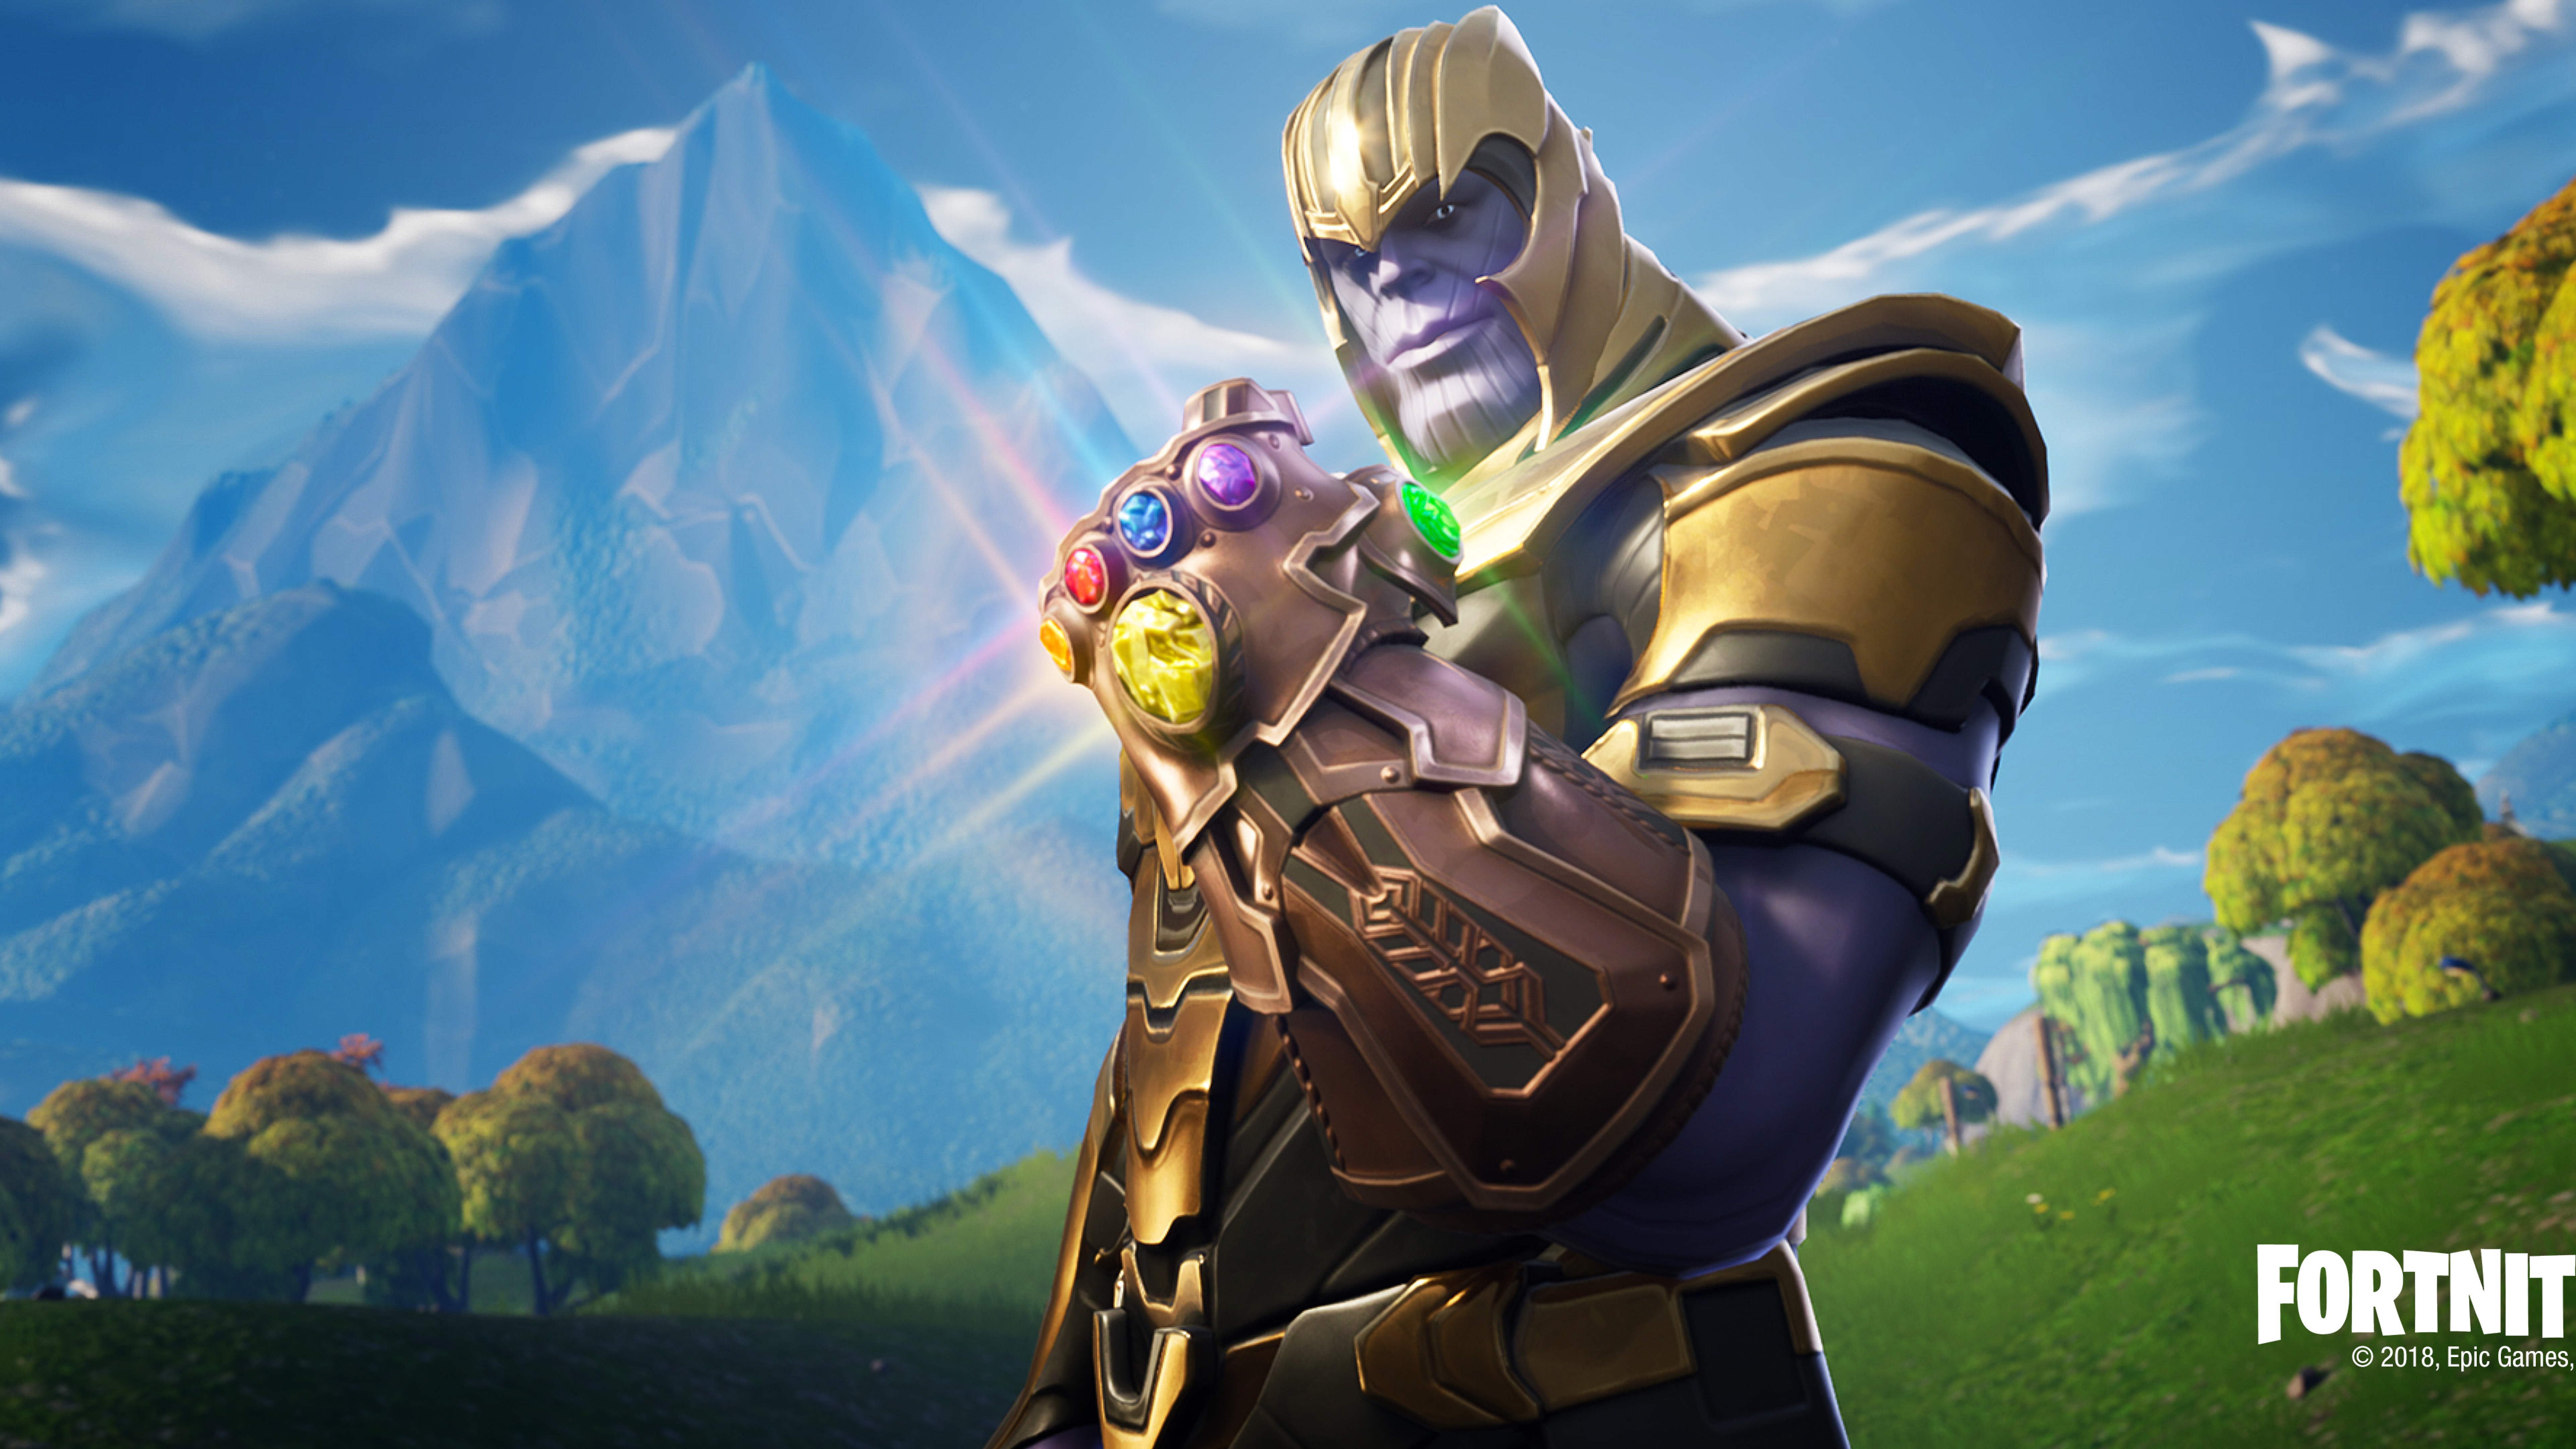 Download Thanos In Fortnite Battle Royale 1280x2120 ... - 7680 x 4320 jpeg 3637kB